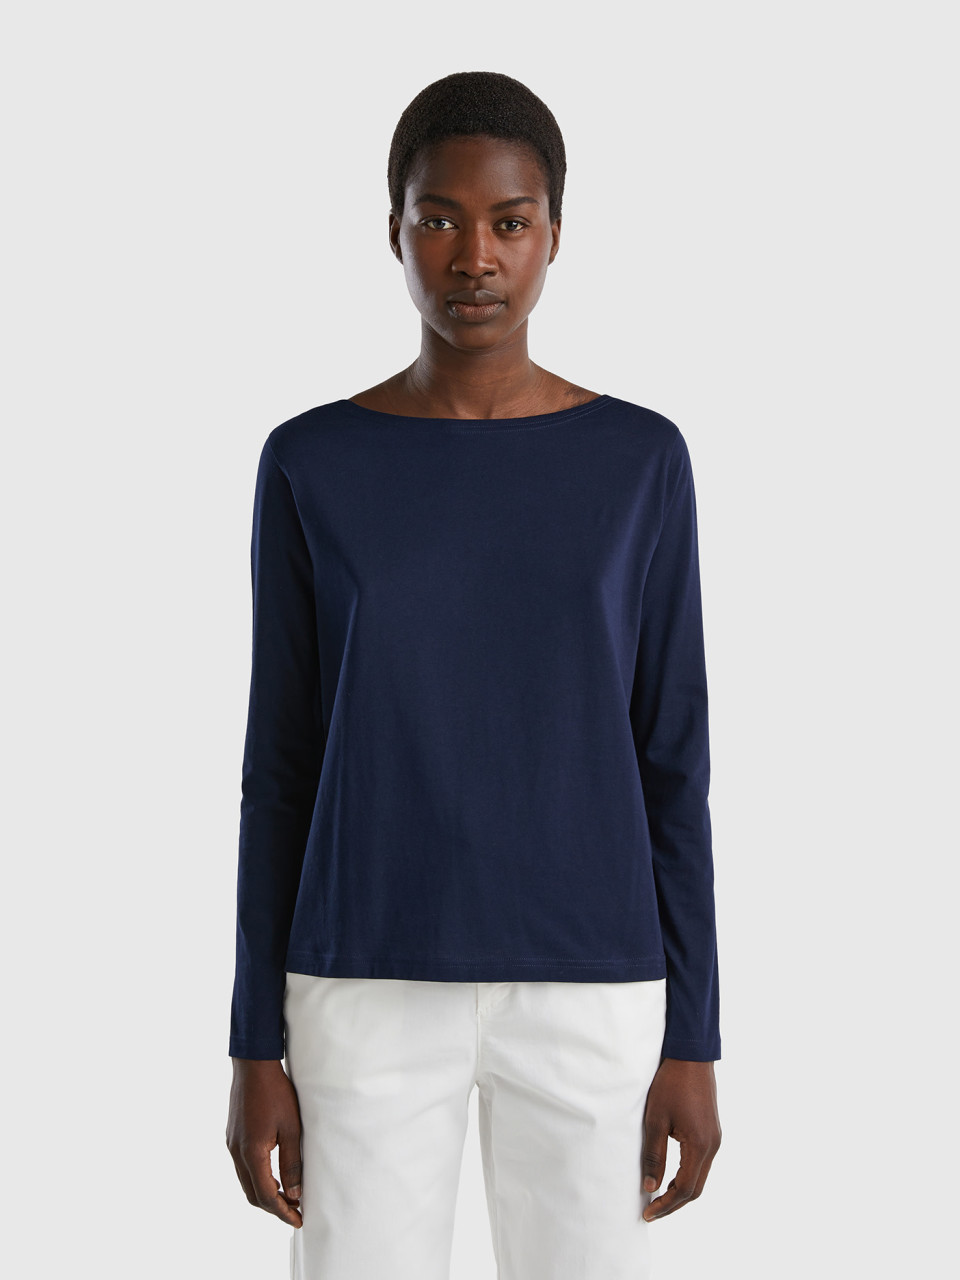 Benetton, T-shirt With Boat Neck In 100% Cotton, Dark Blue, Women